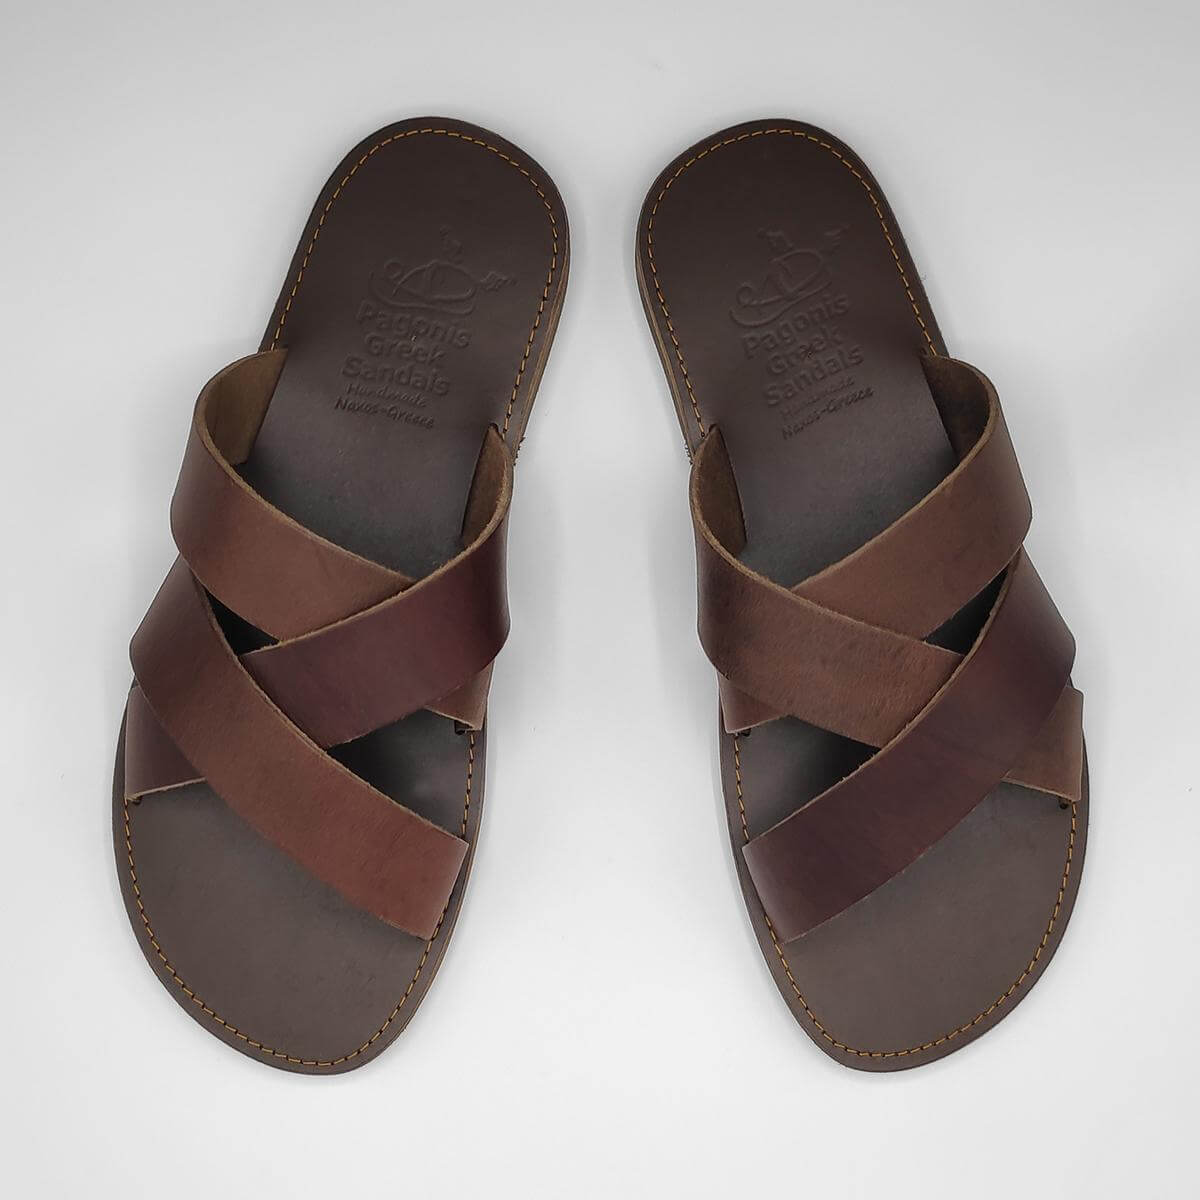 Avithos Handmade Mens Crossover Sandals - Leather Sandals